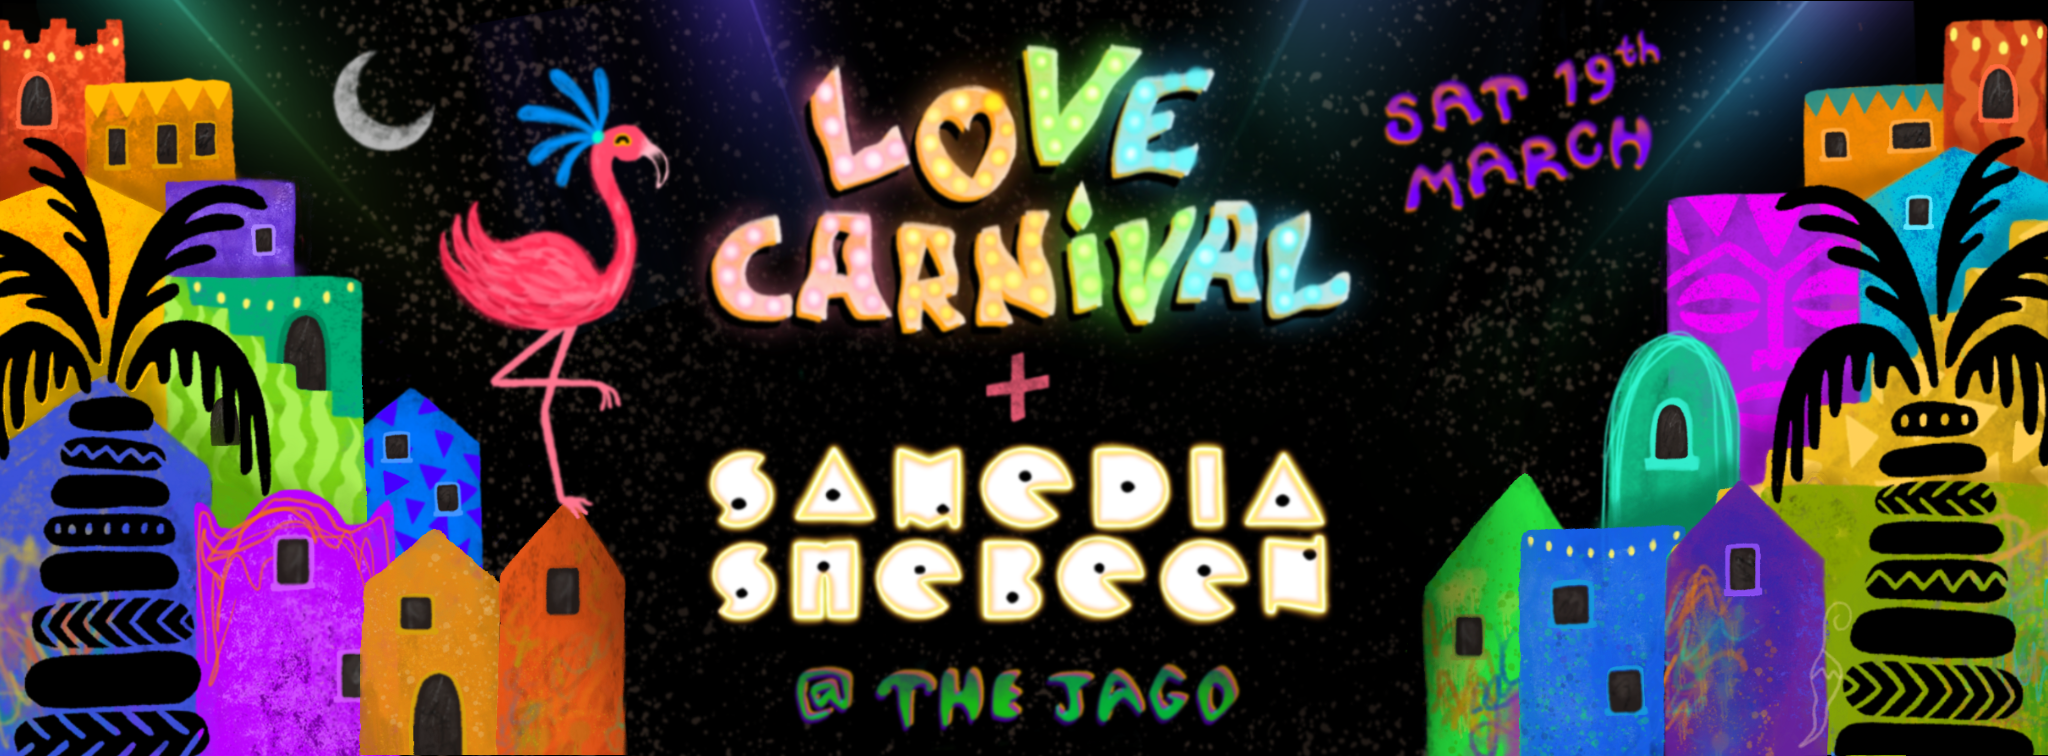 Love Carnival x Samedia Shebeen - Página frontal